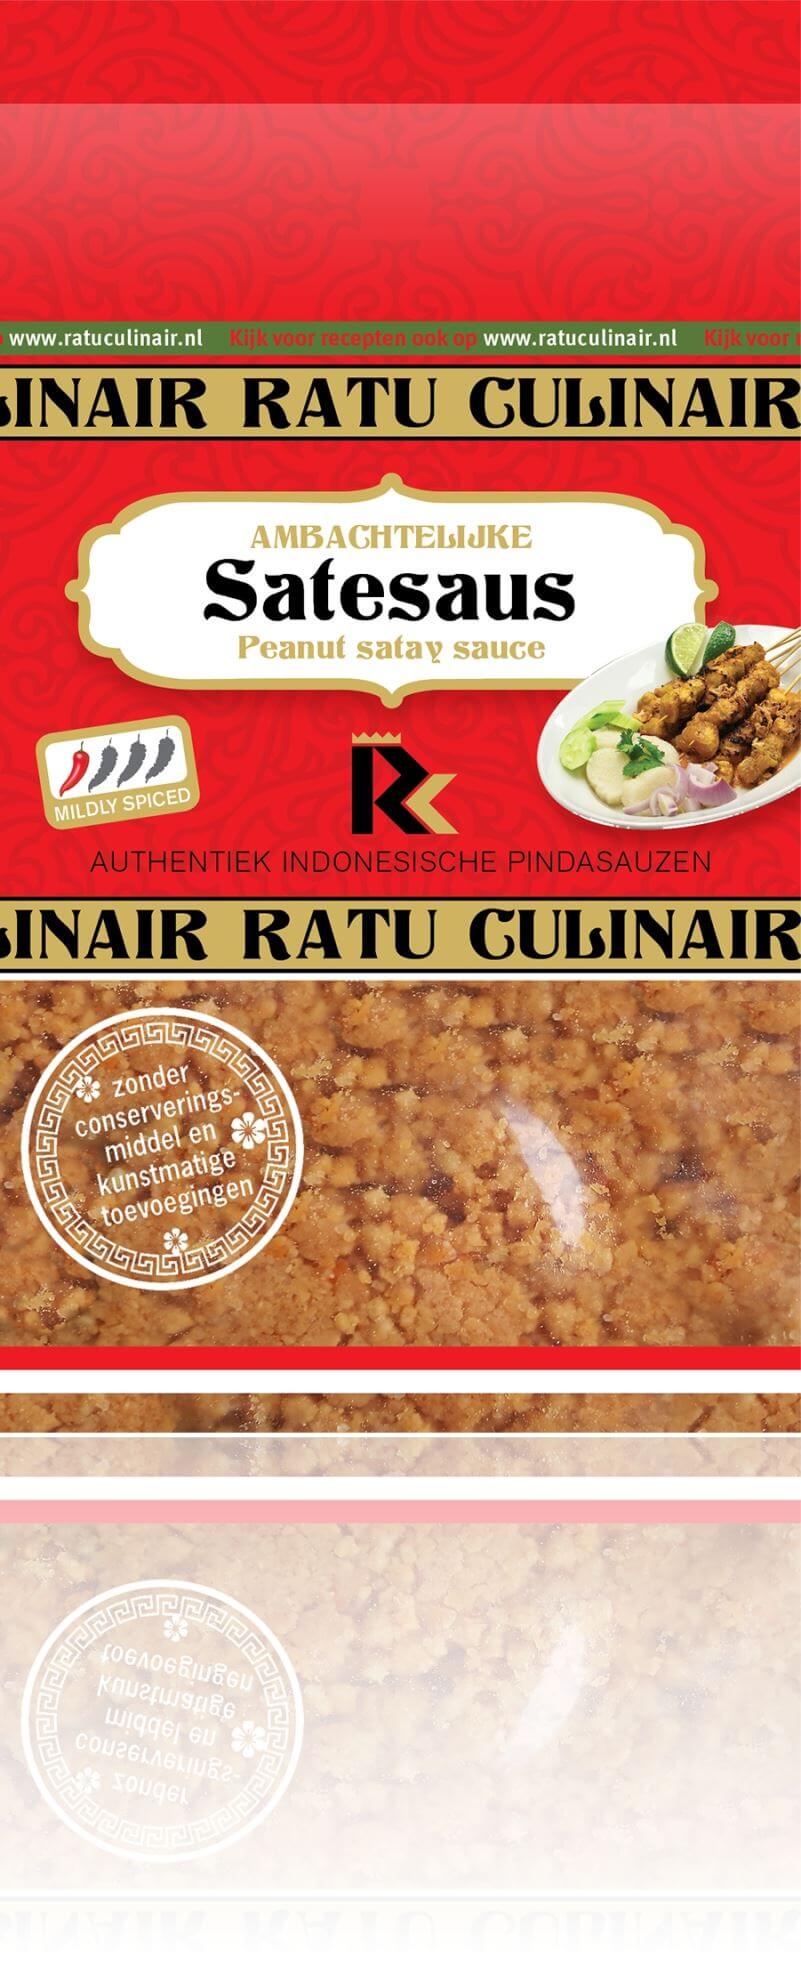 satesaus-regular-ratu-culinair-glutenvrij